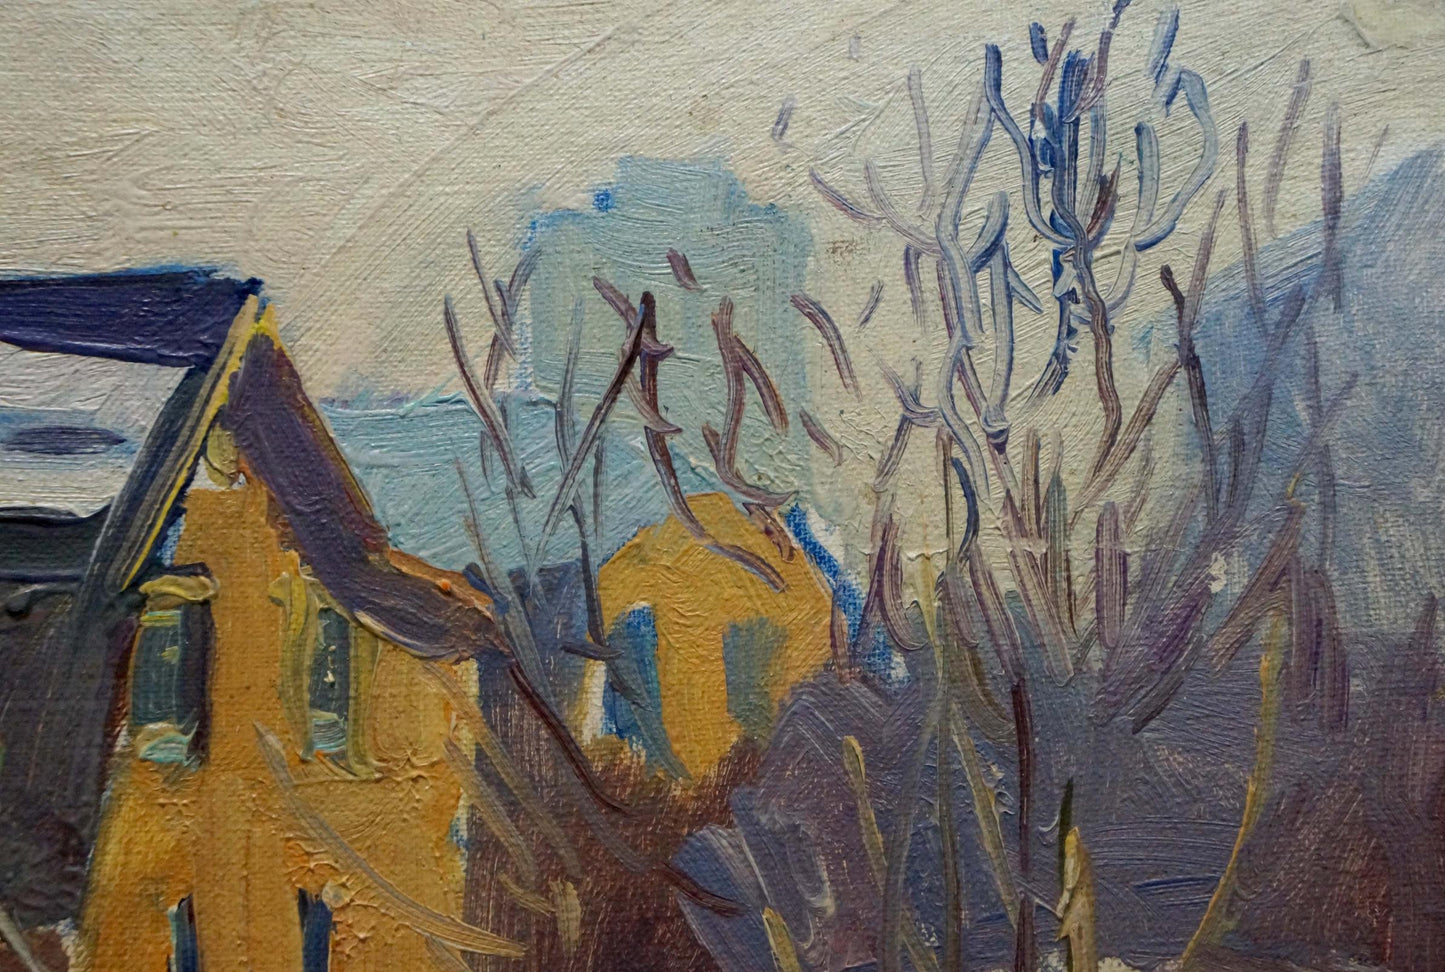 Oil painting Winter landscape Gantman Moisey Faibovich